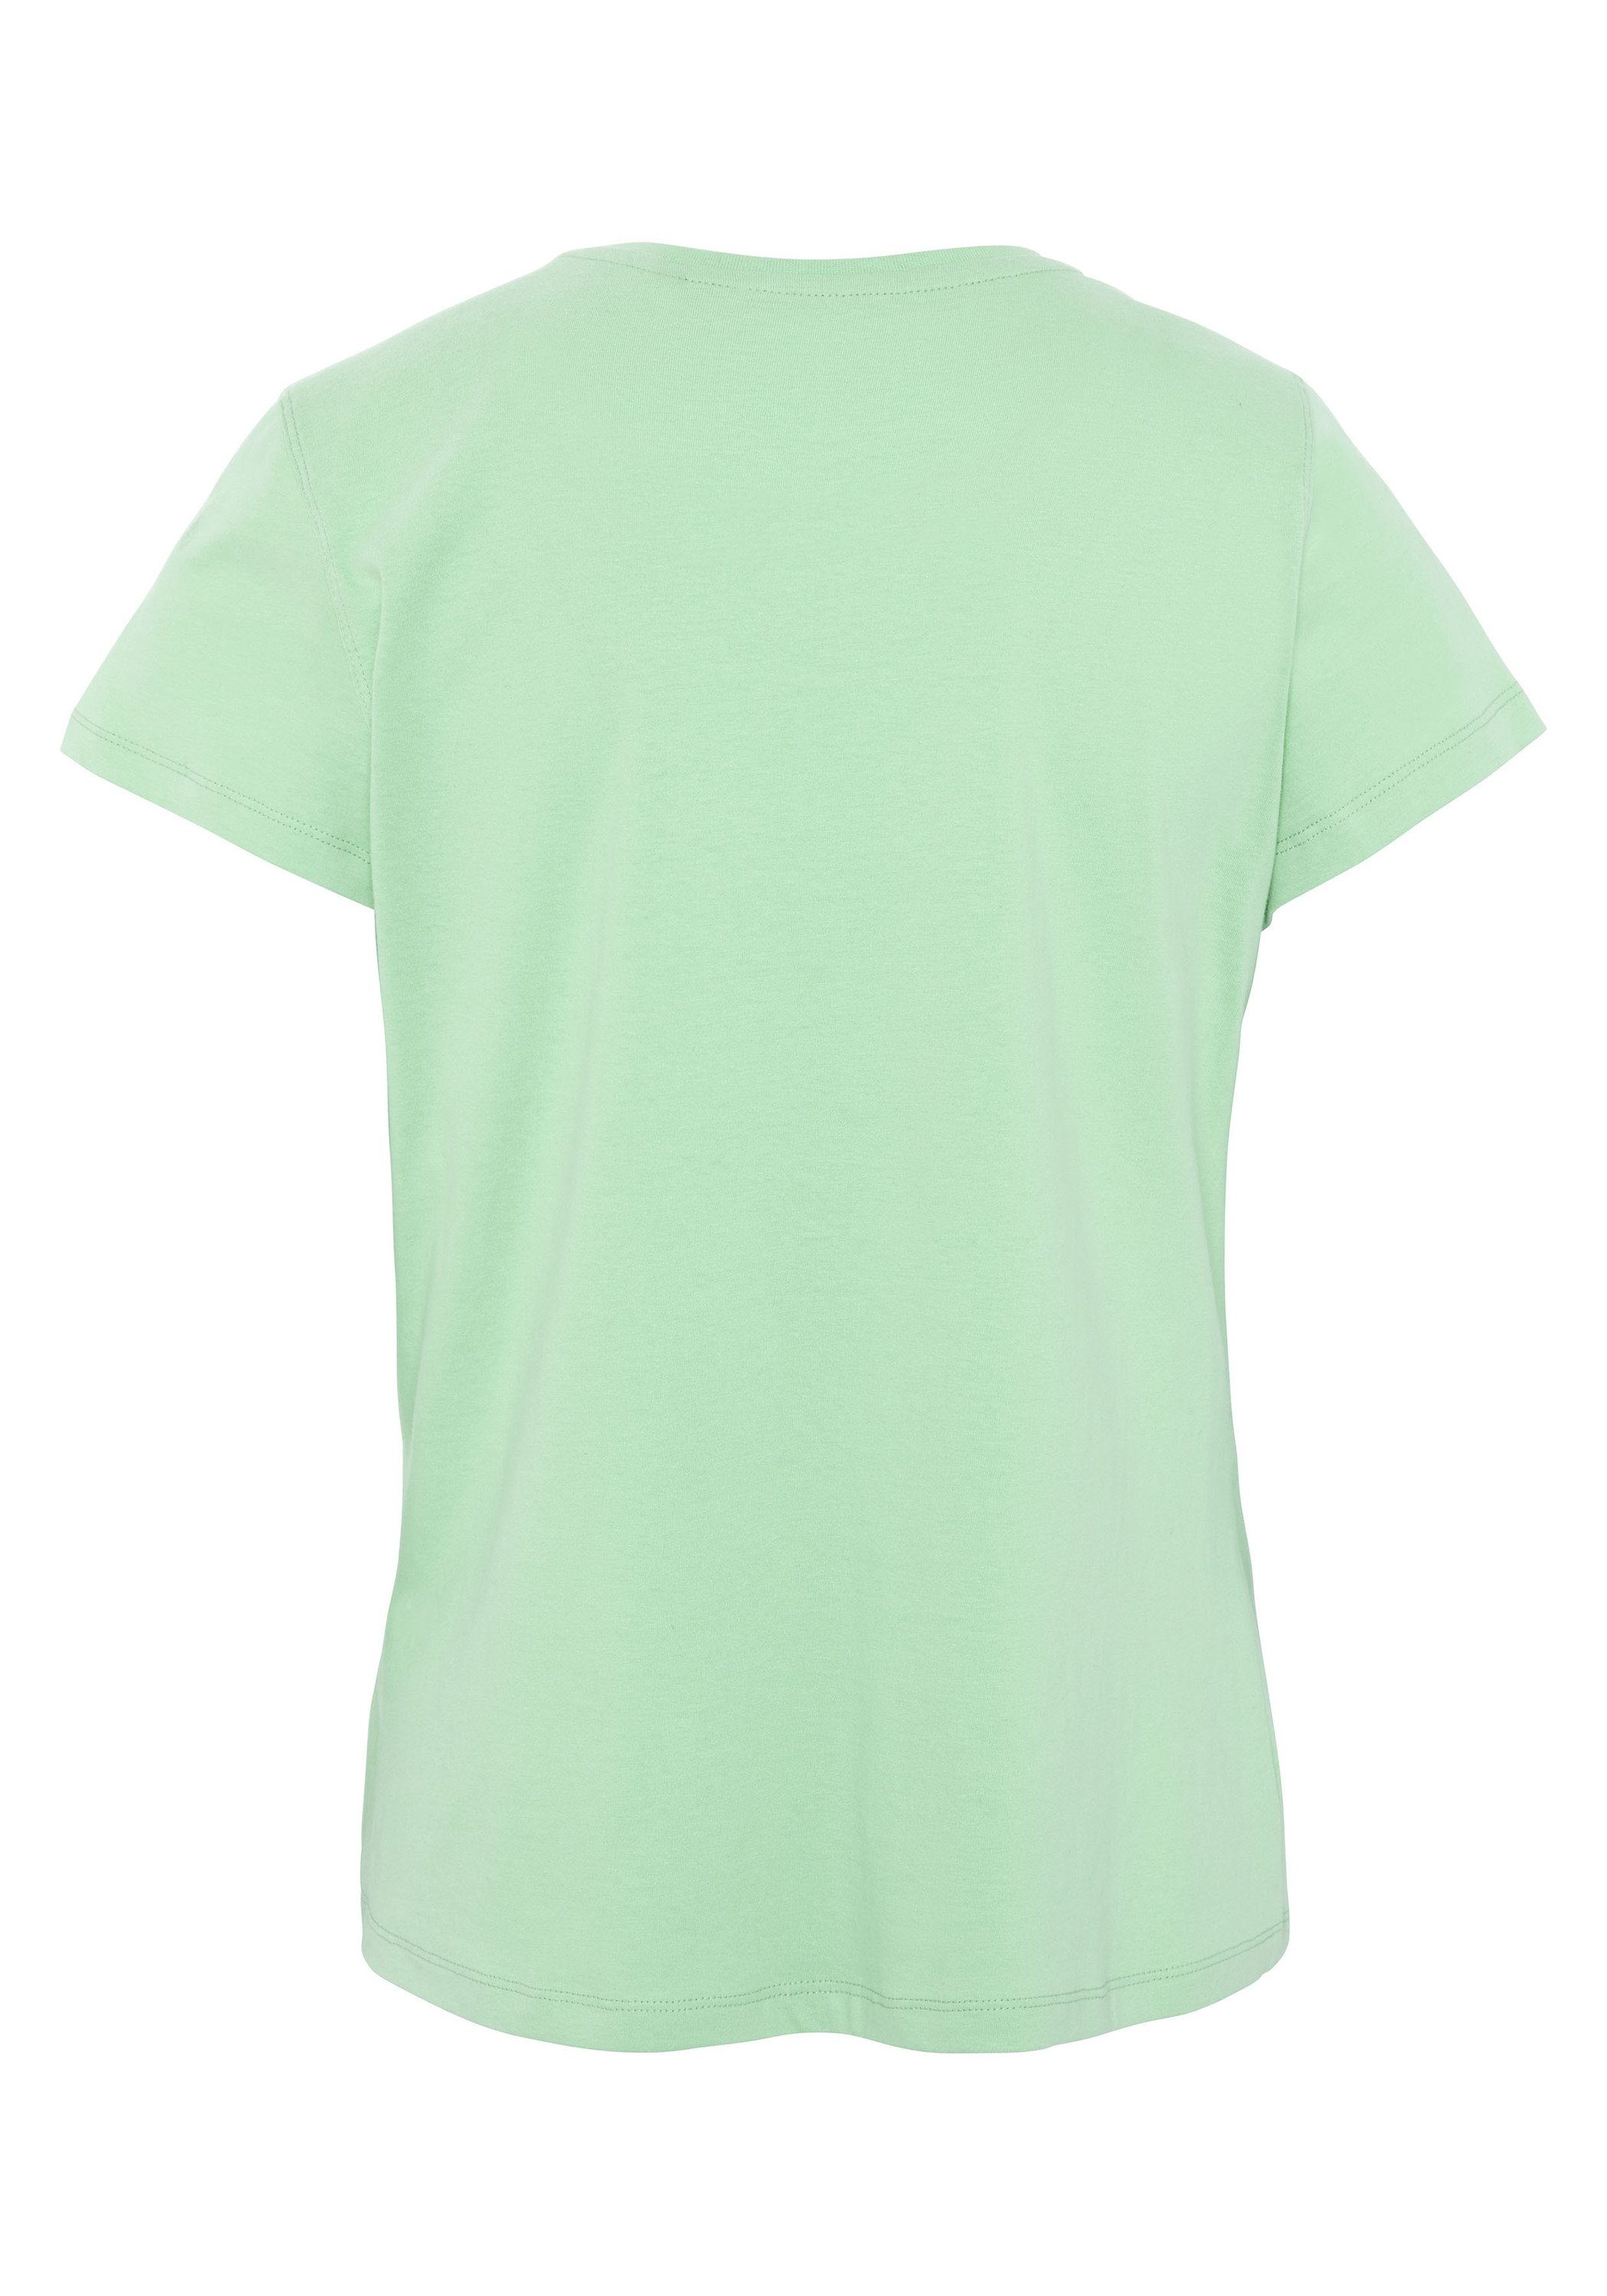 Farbverlauf-Optik 1 Print-Shirt Chiemsee T-Shirt Neptune Logo Green mit in